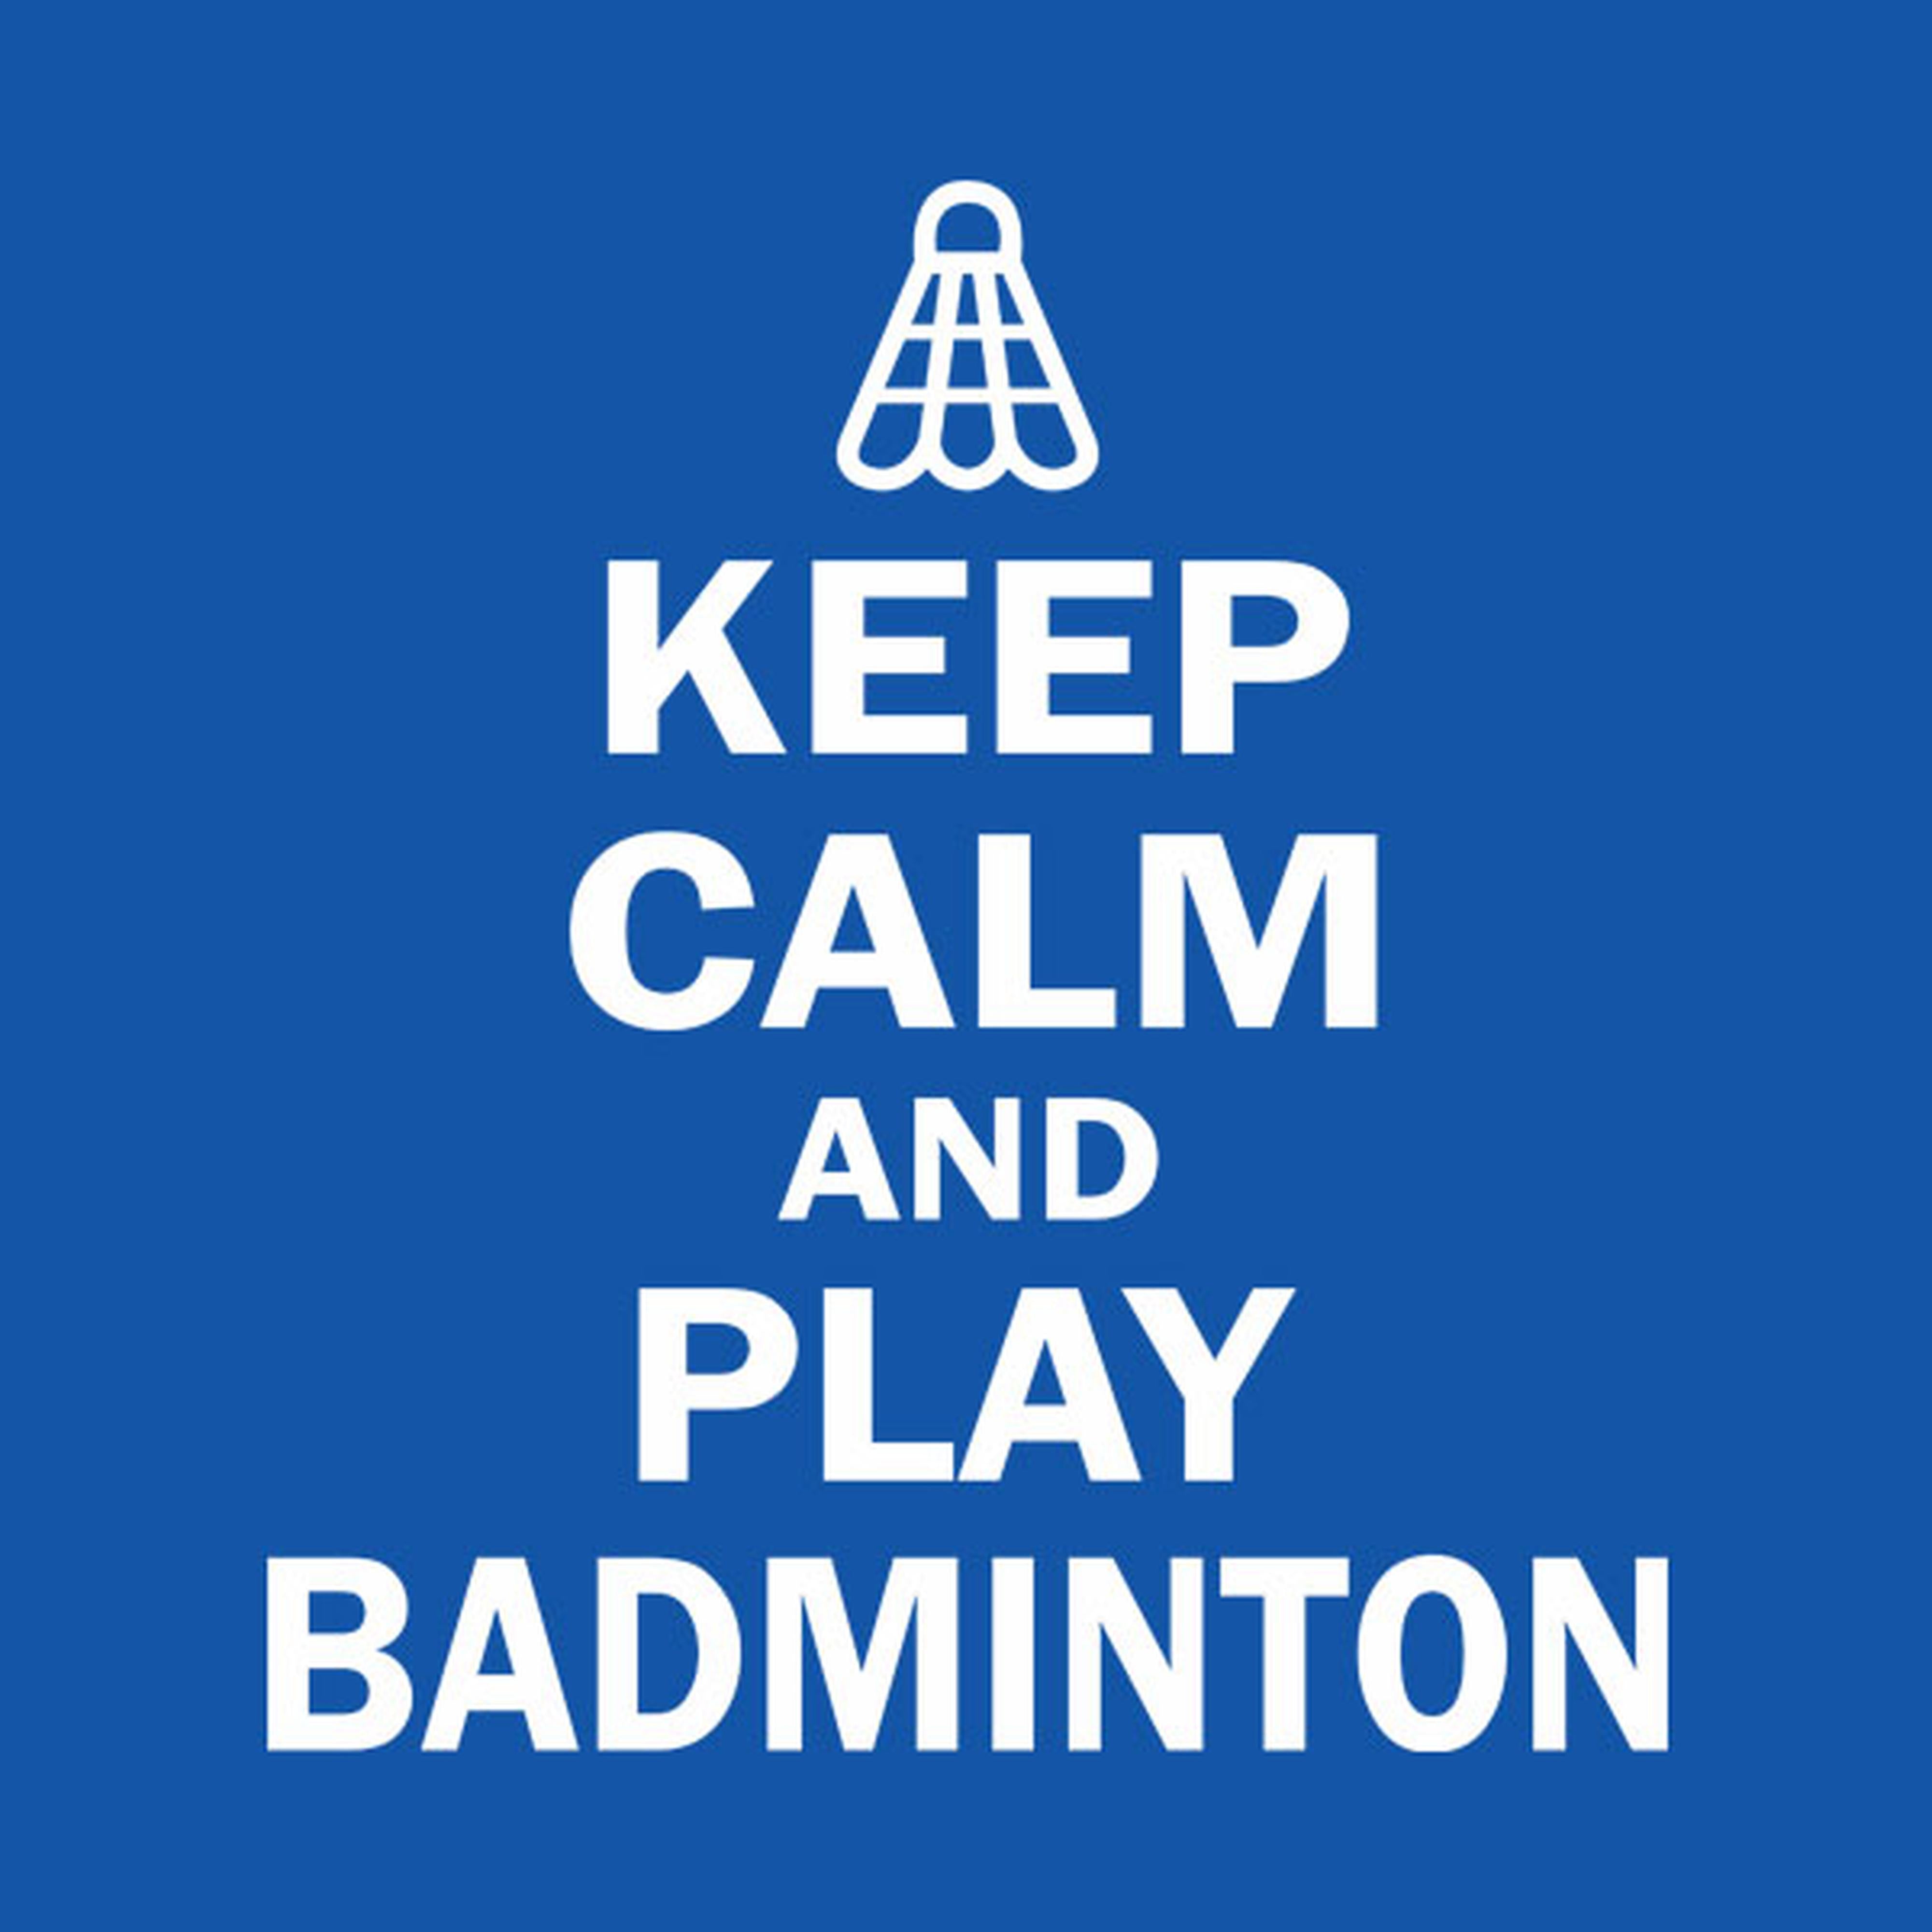 Keep calm and play badminton - T-shirt